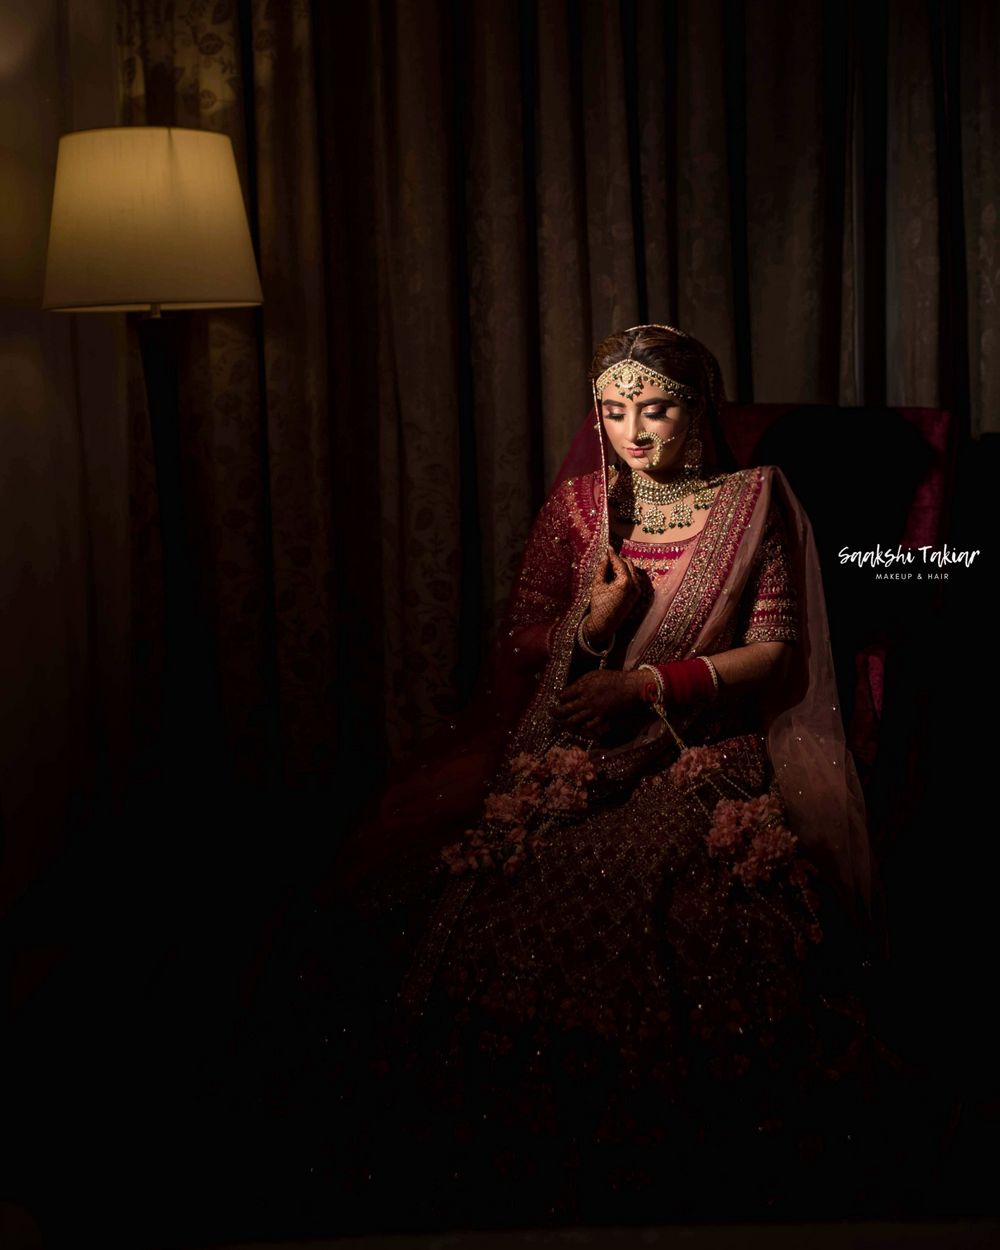 Photo From Sugandha's Bridal Makeup - By Makeup by Saakshi Takiar